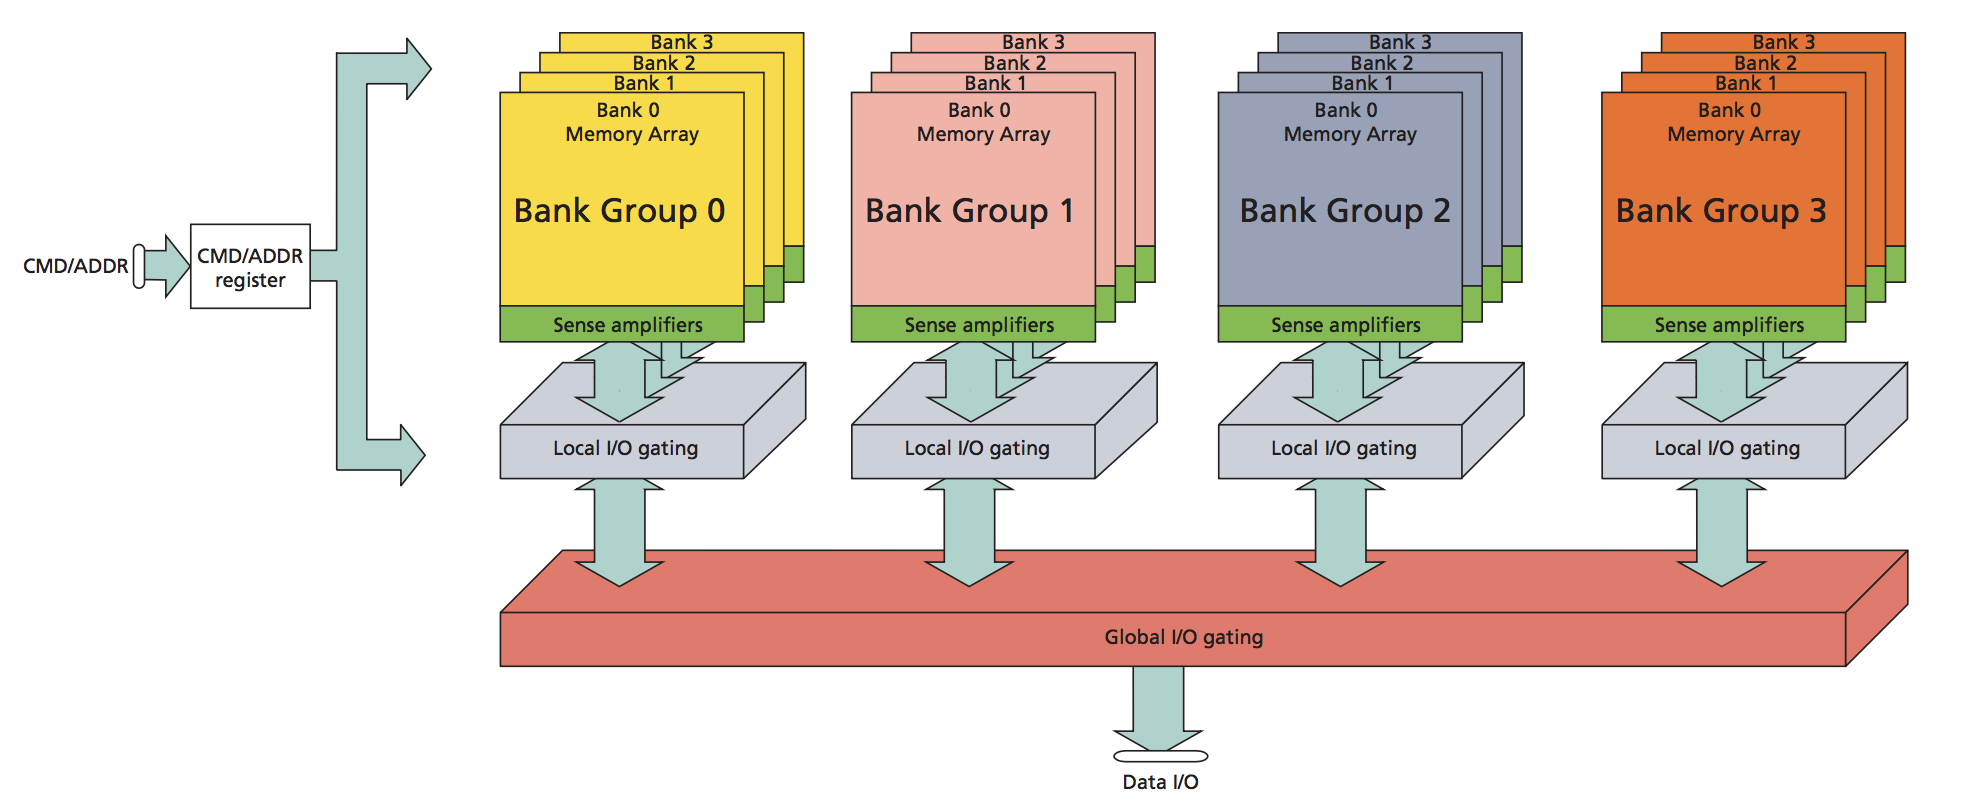 Figure 2: BankGroup & Bank